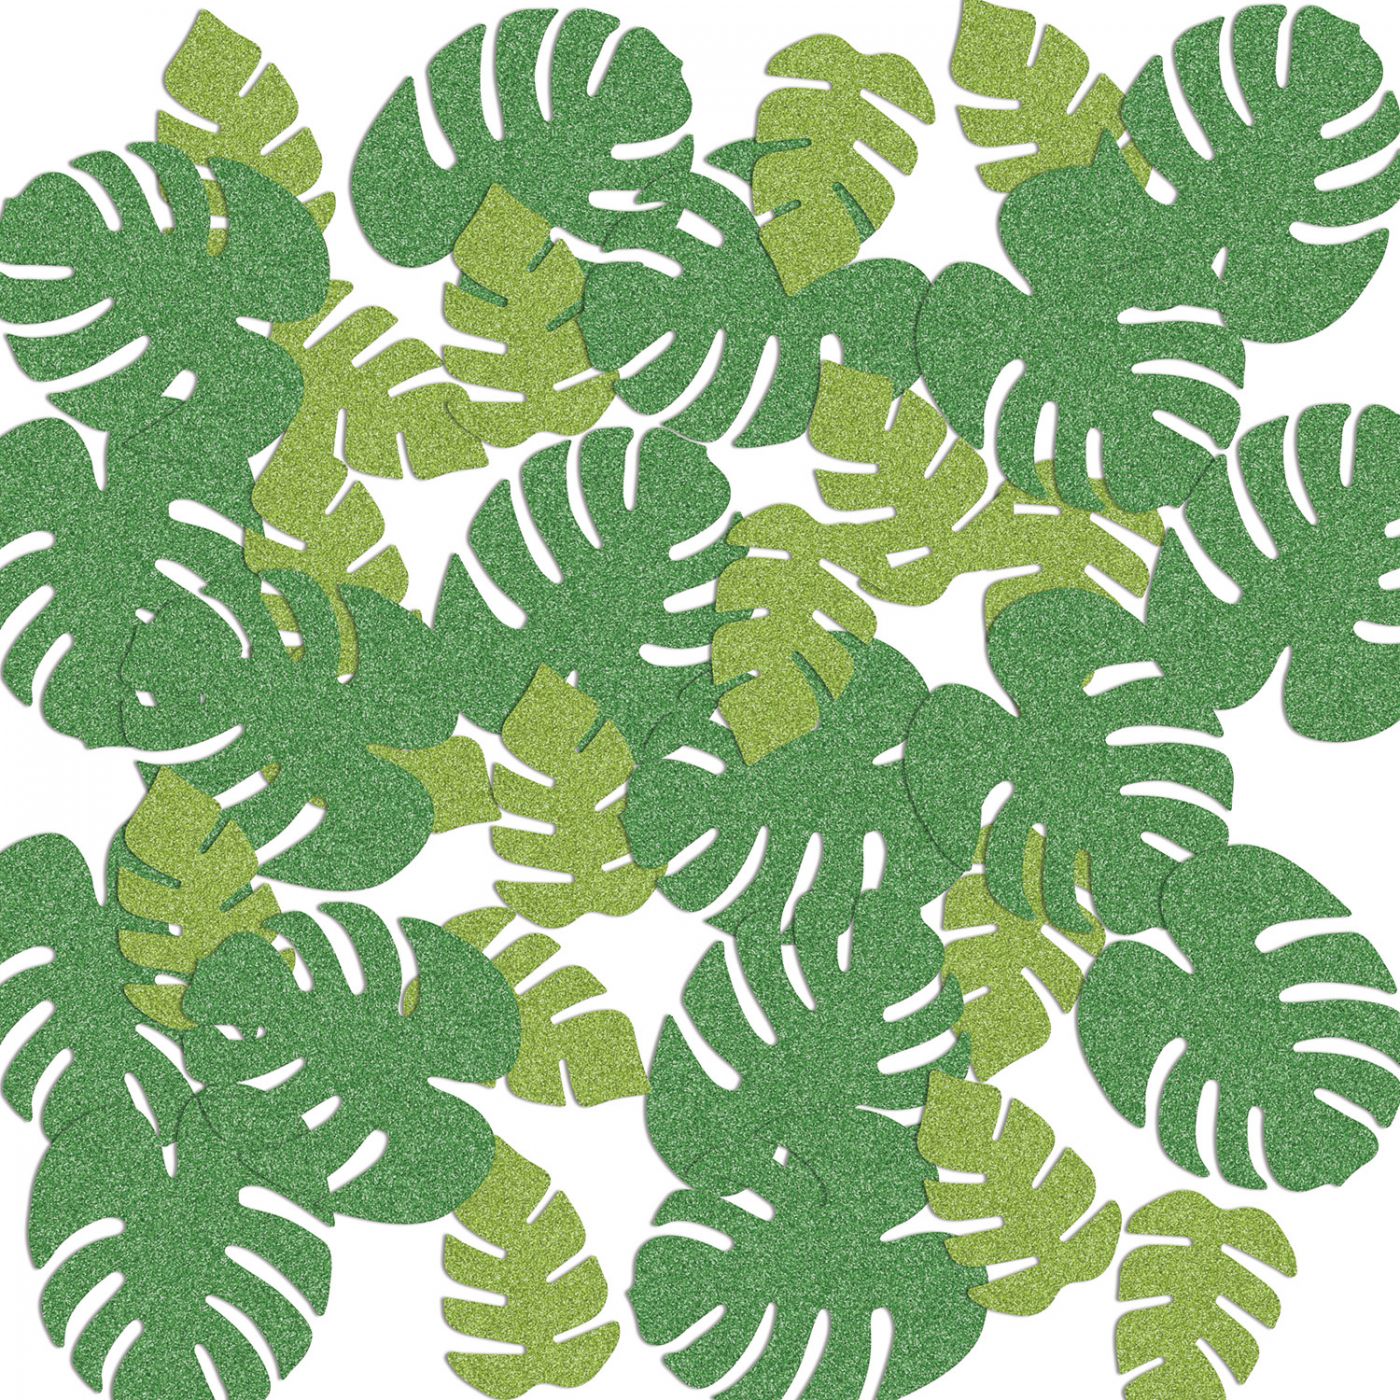 Tropical Palm Leaf Del Sparkle Confetti image